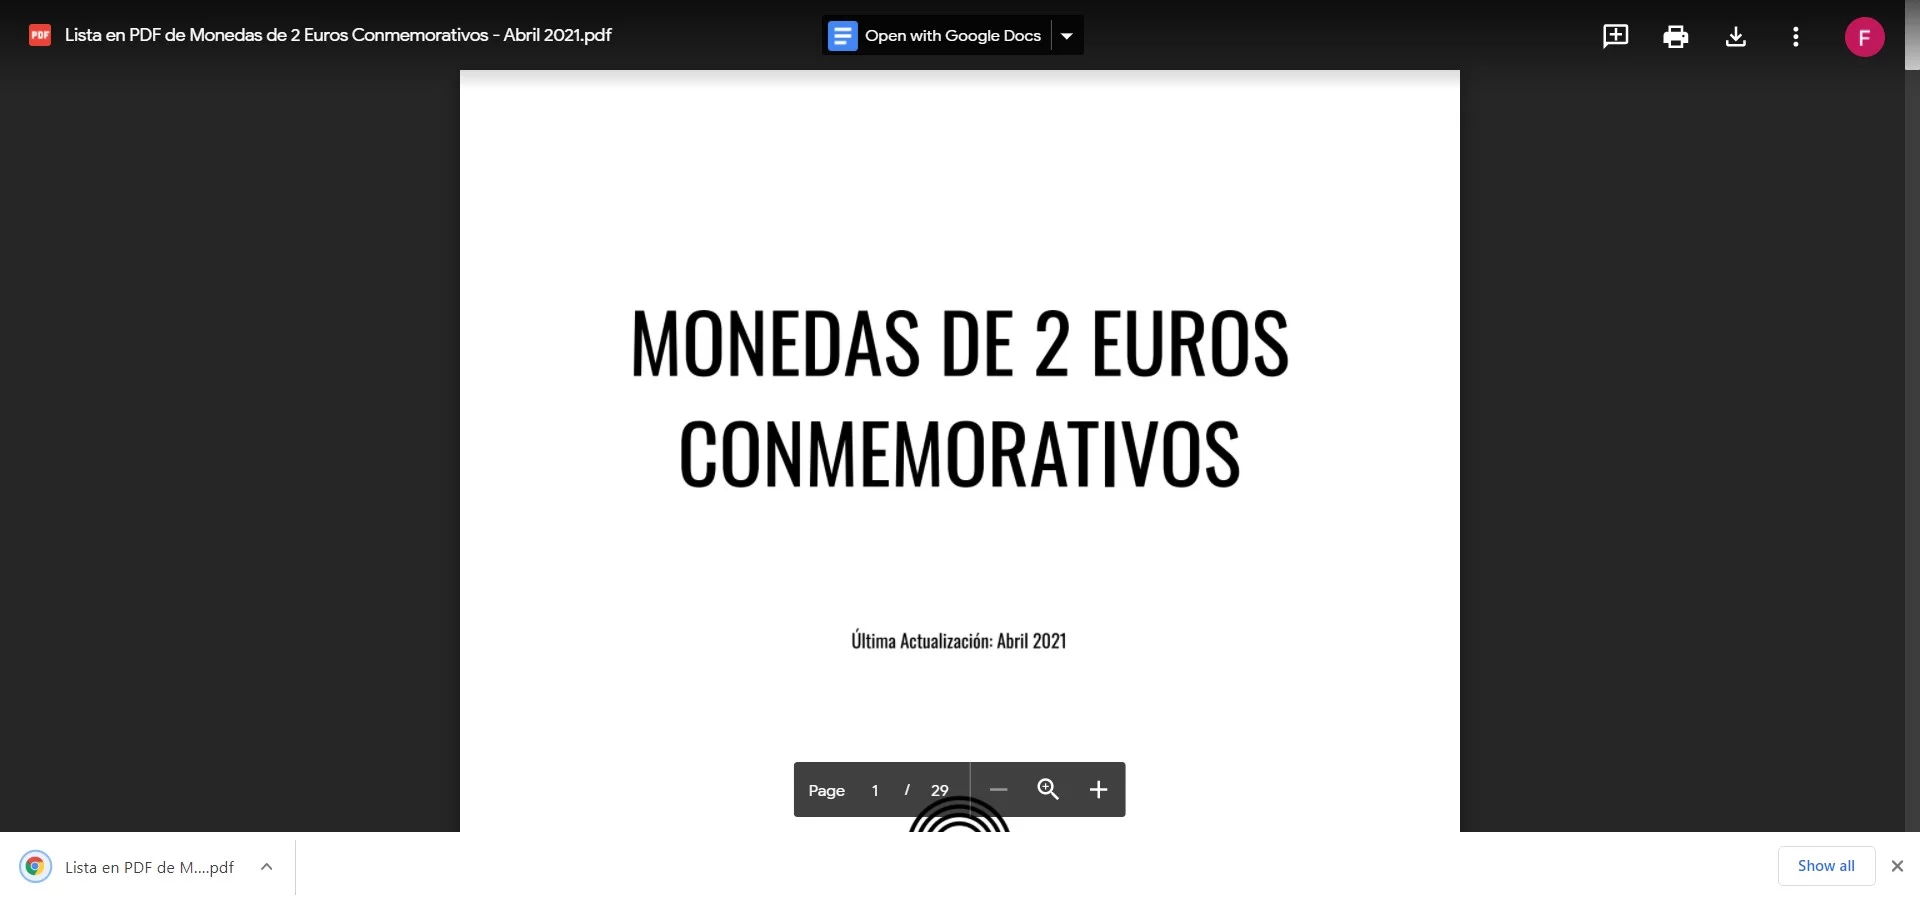 Lista de Monedas Conmemorativas de 2 Euros en PDF Descargada